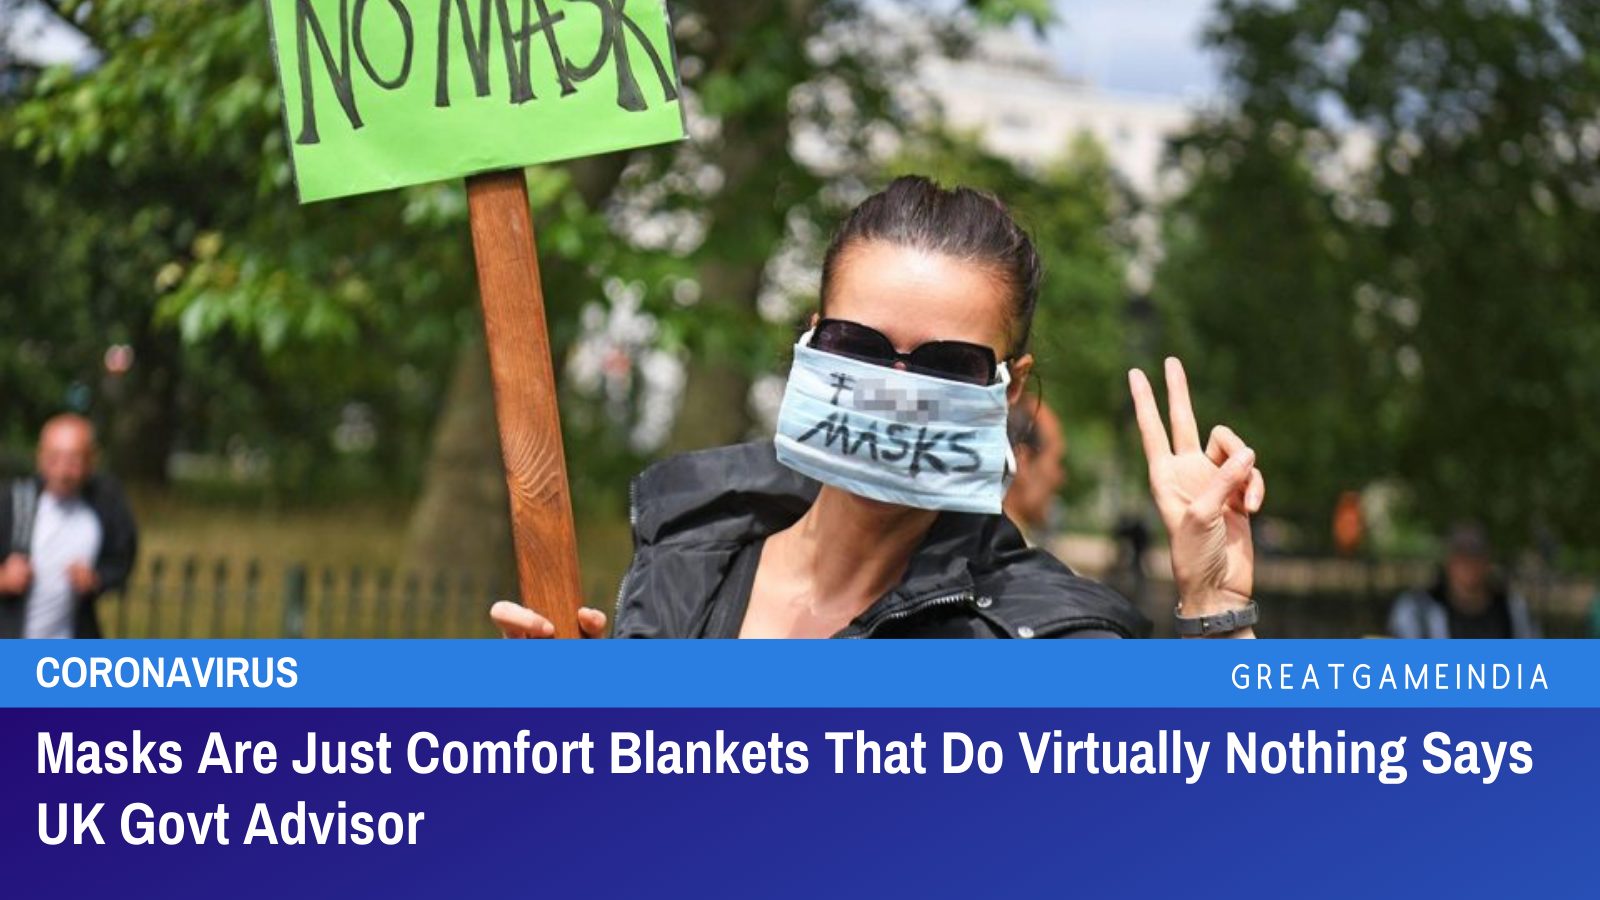 Masks Are Just Comfort Blankets That Do Virtually Nothing Says UK Govt Advisor